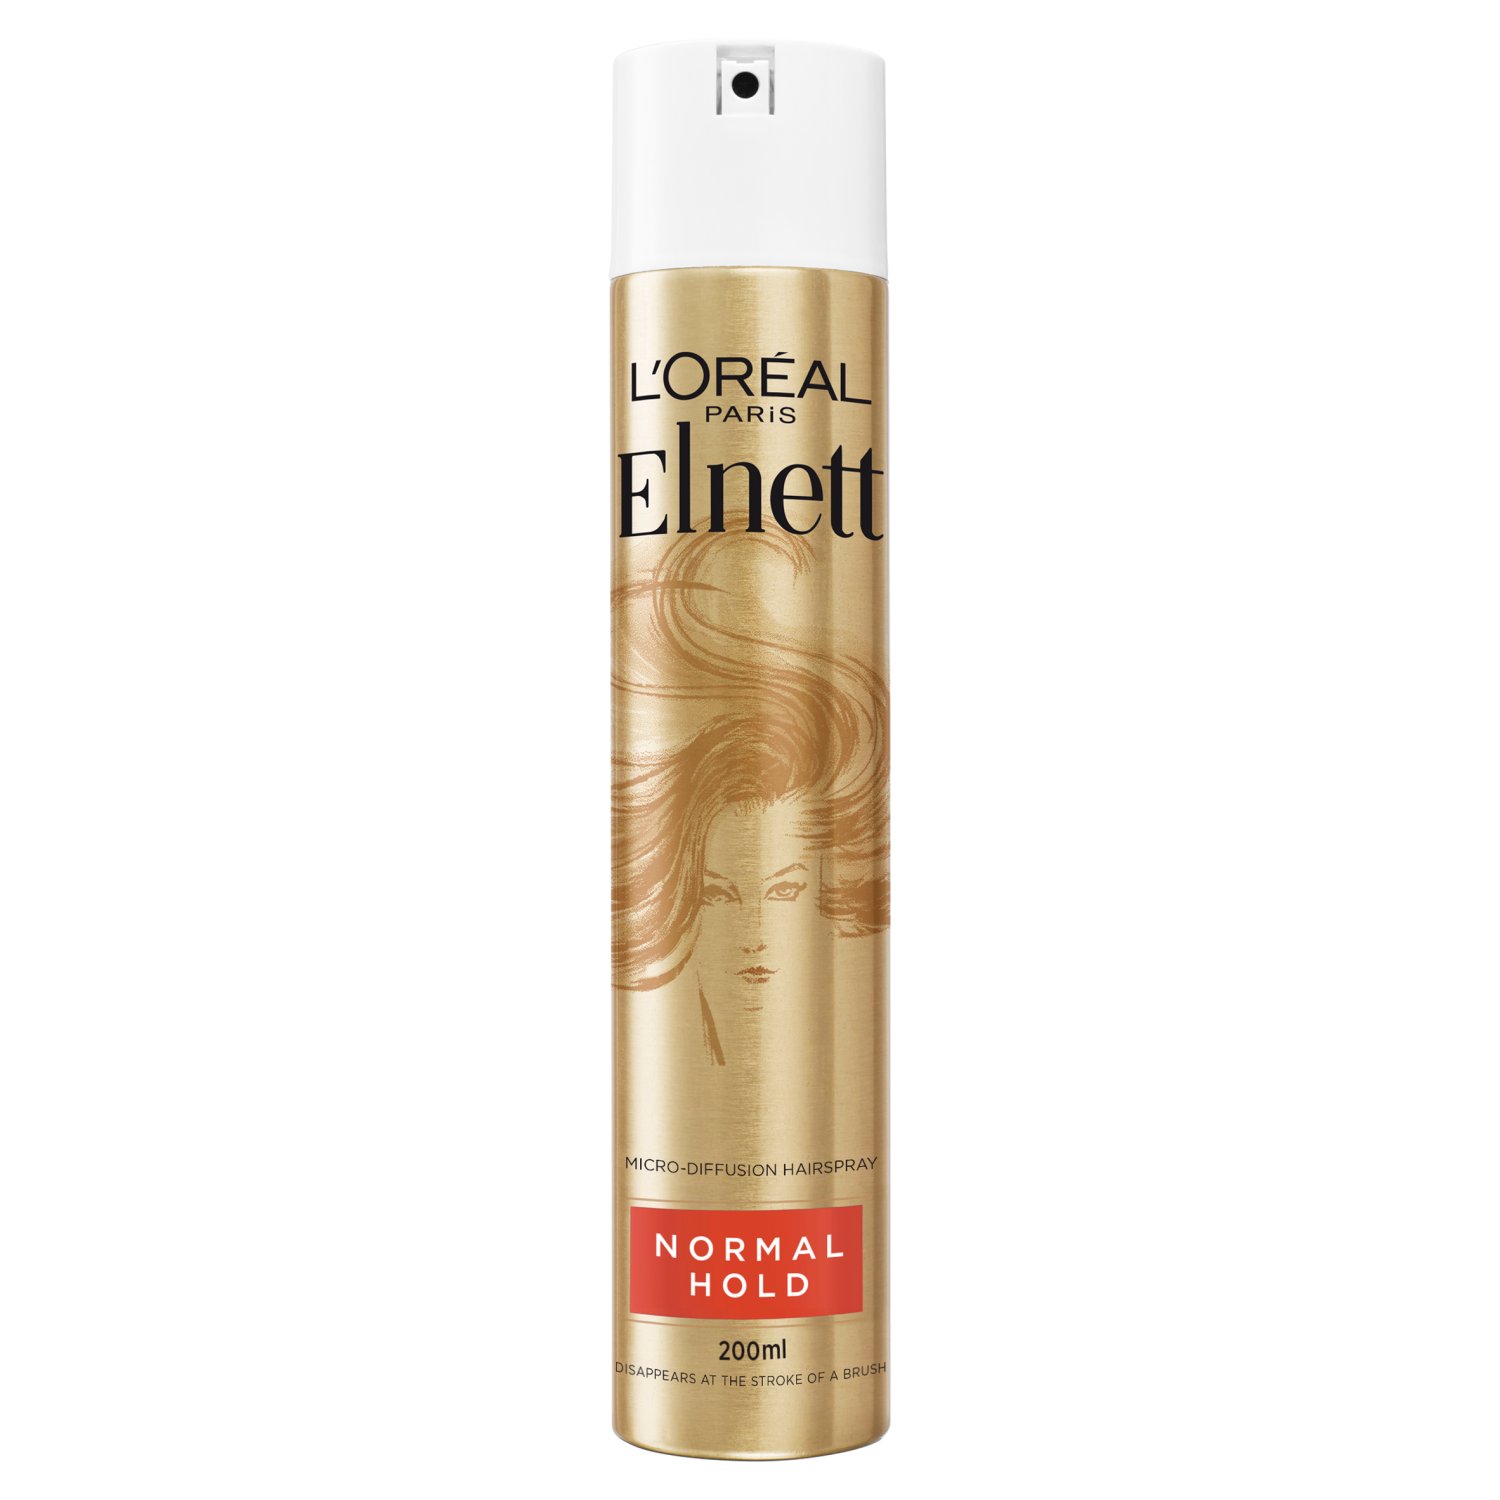 L'Oreal Elnett Normal Hold Hairspray (200 ml)